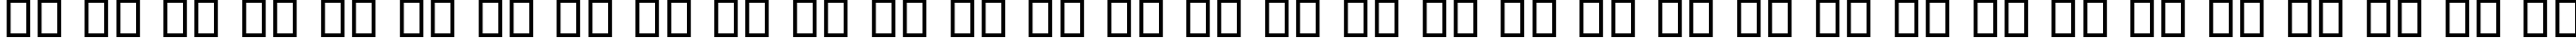 Пример написания русского алфавита шрифтом Angelina